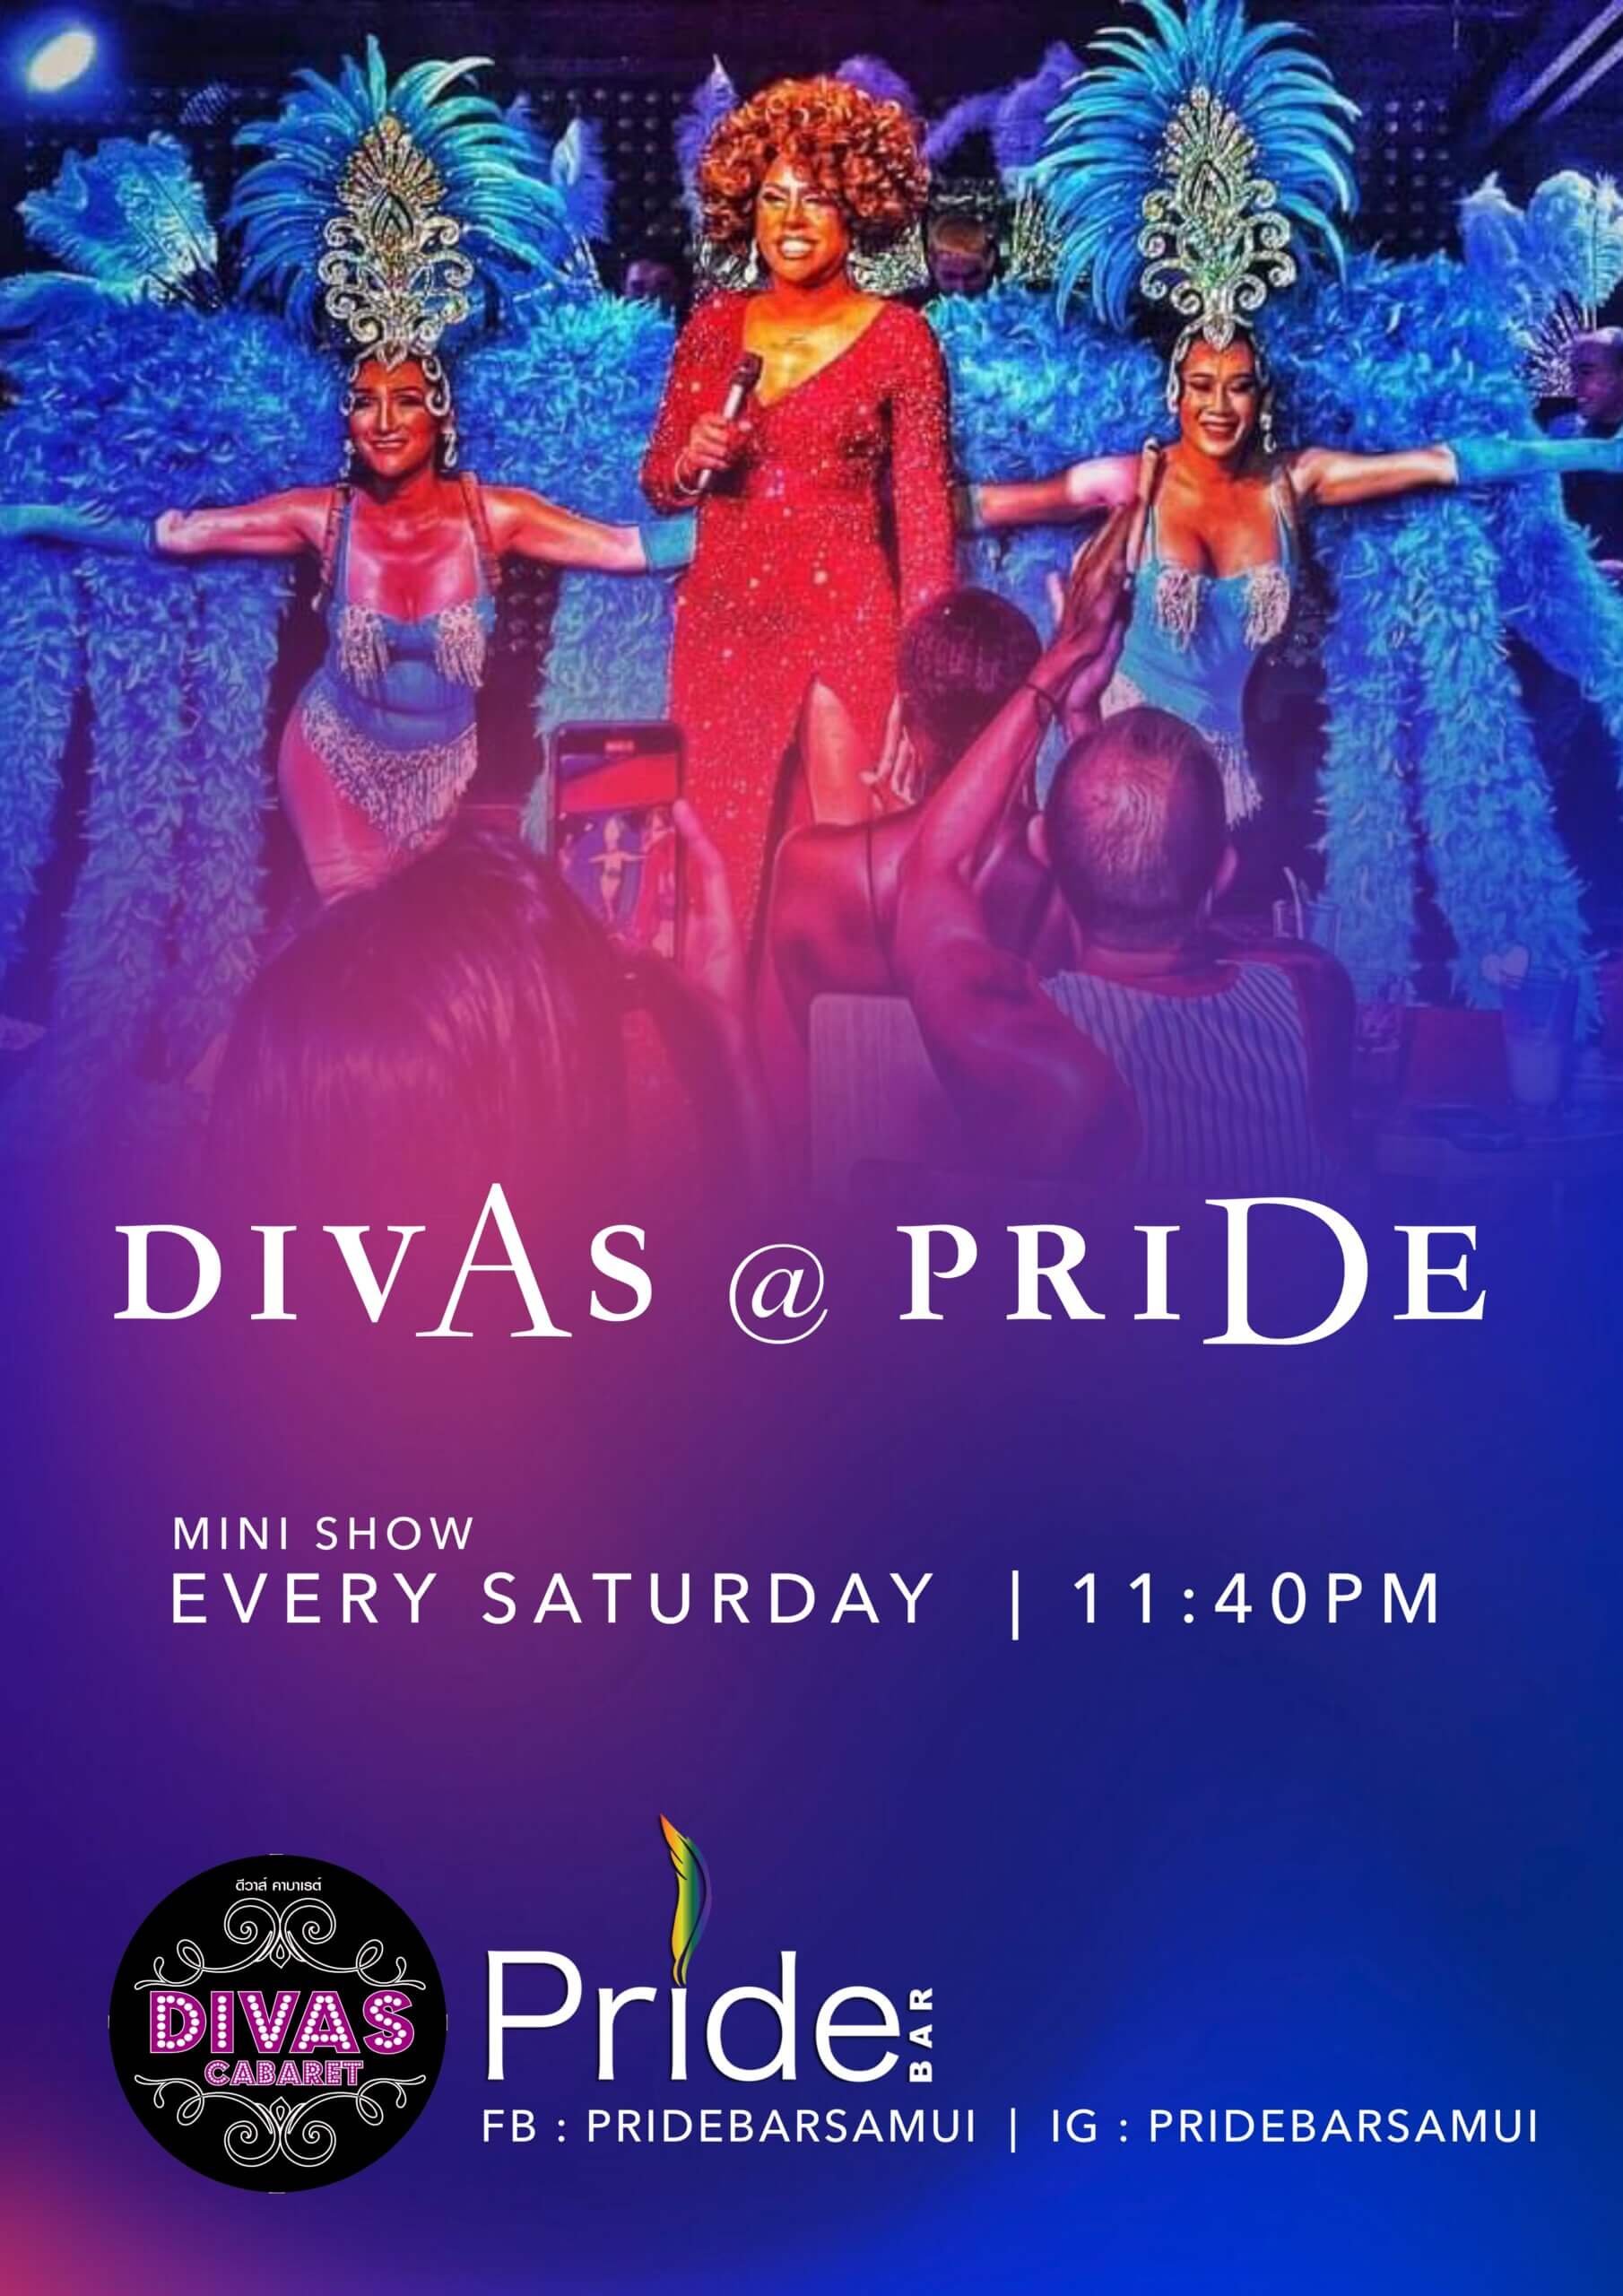 Divas Cabaret at Pride Poster 1